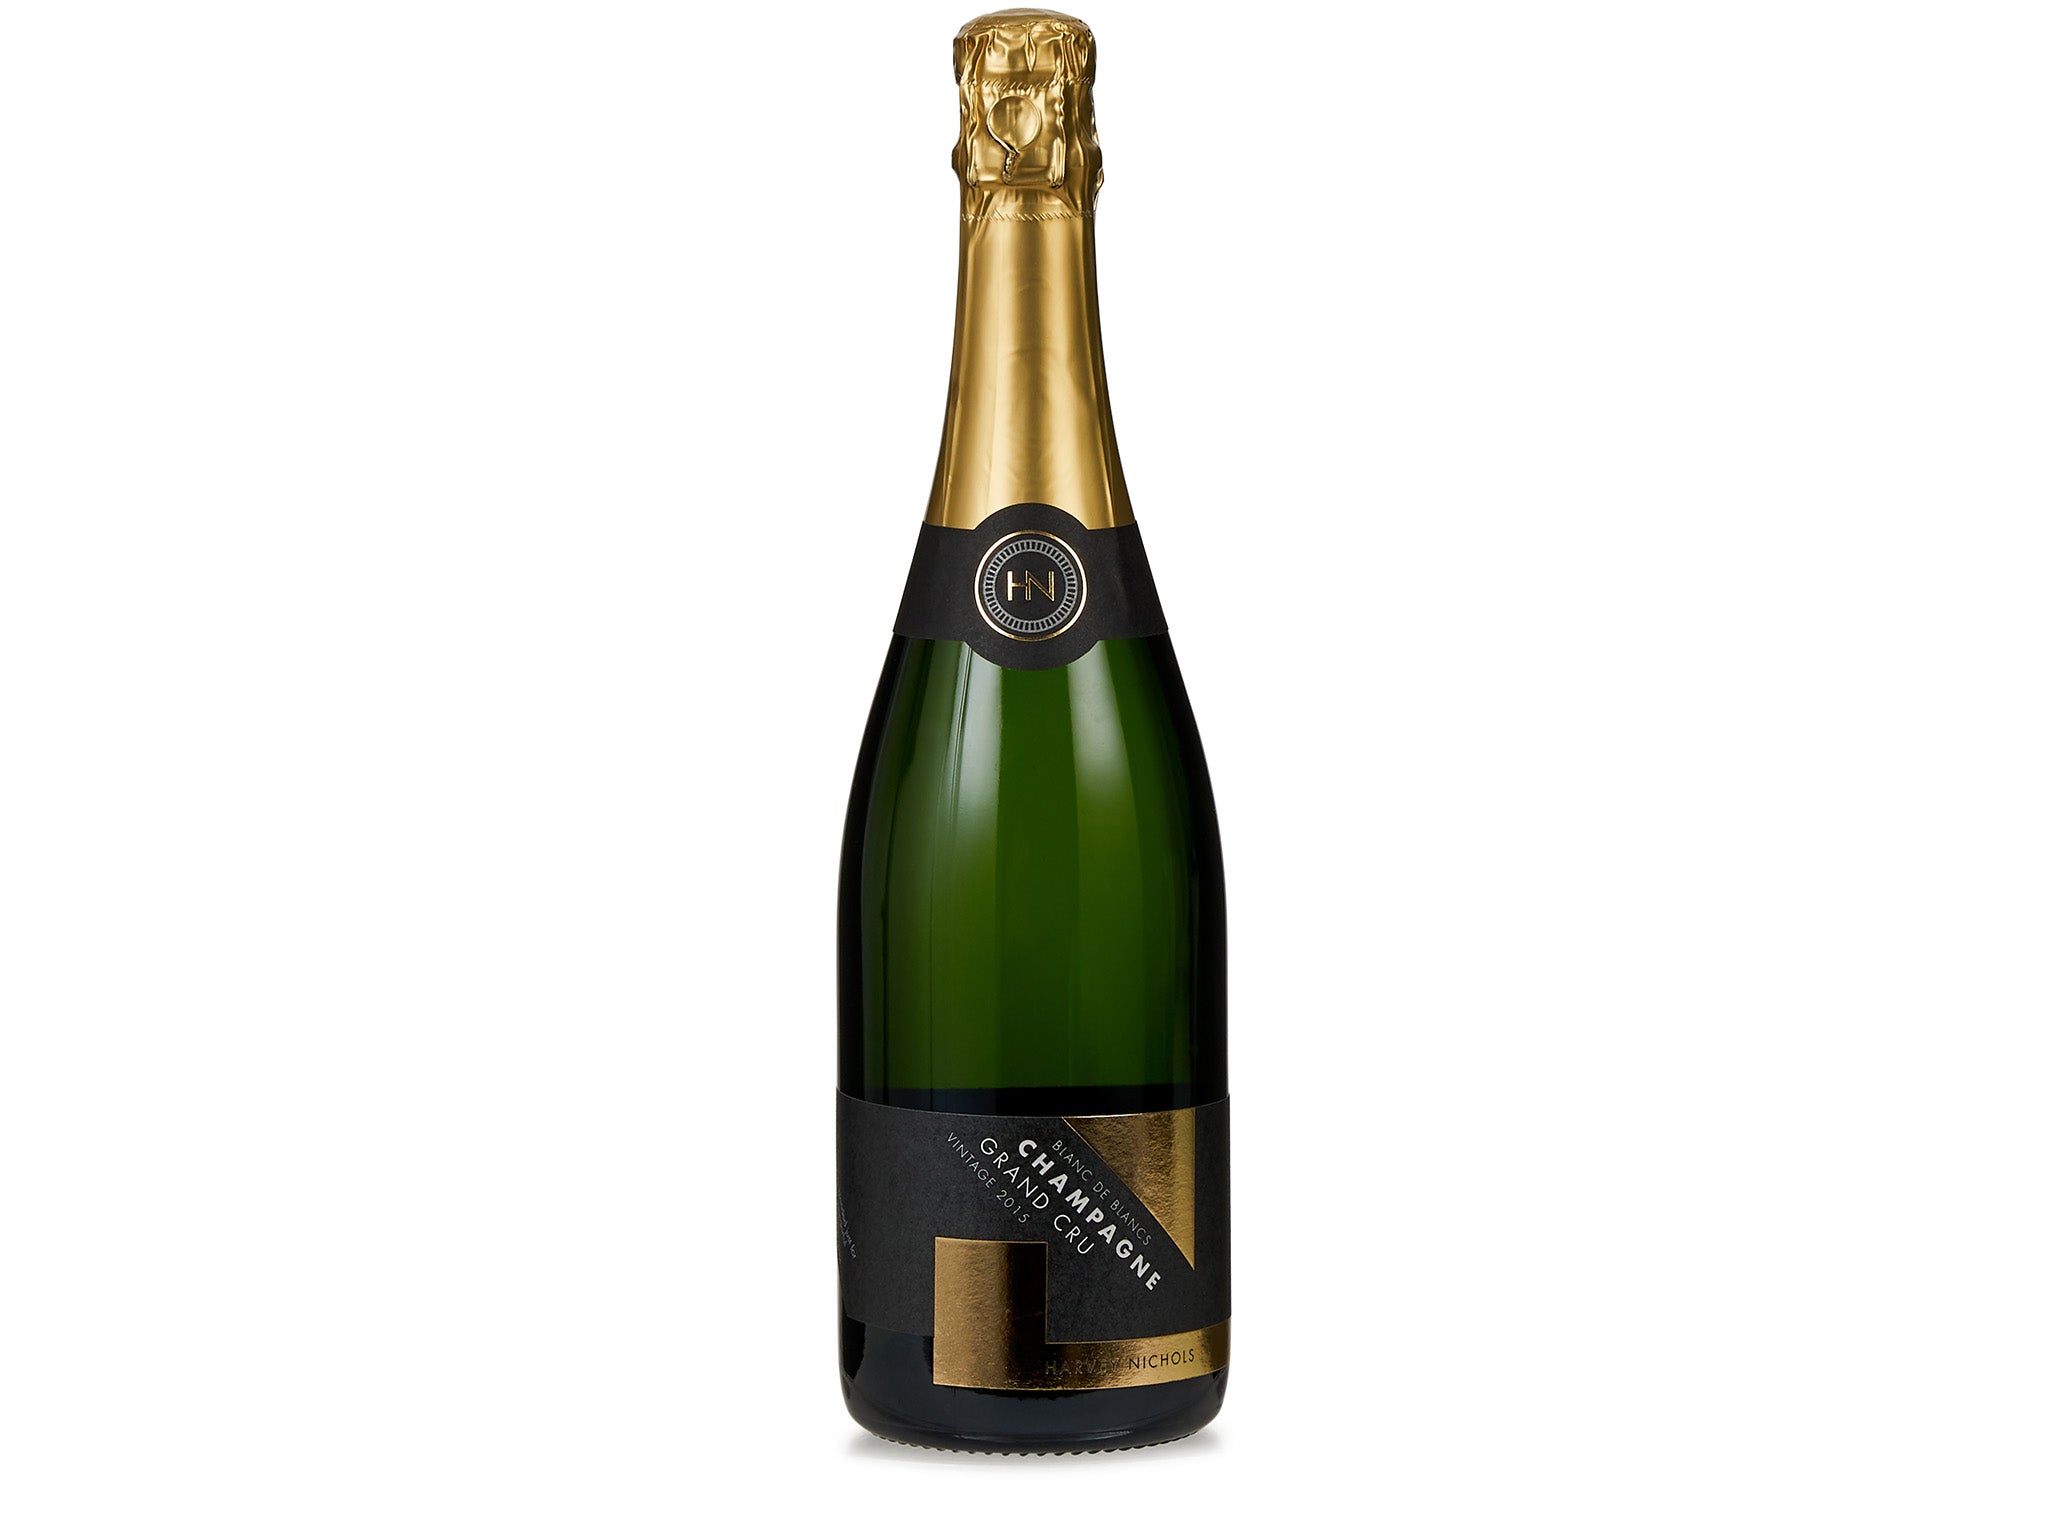 Harvey Nichols champagne review